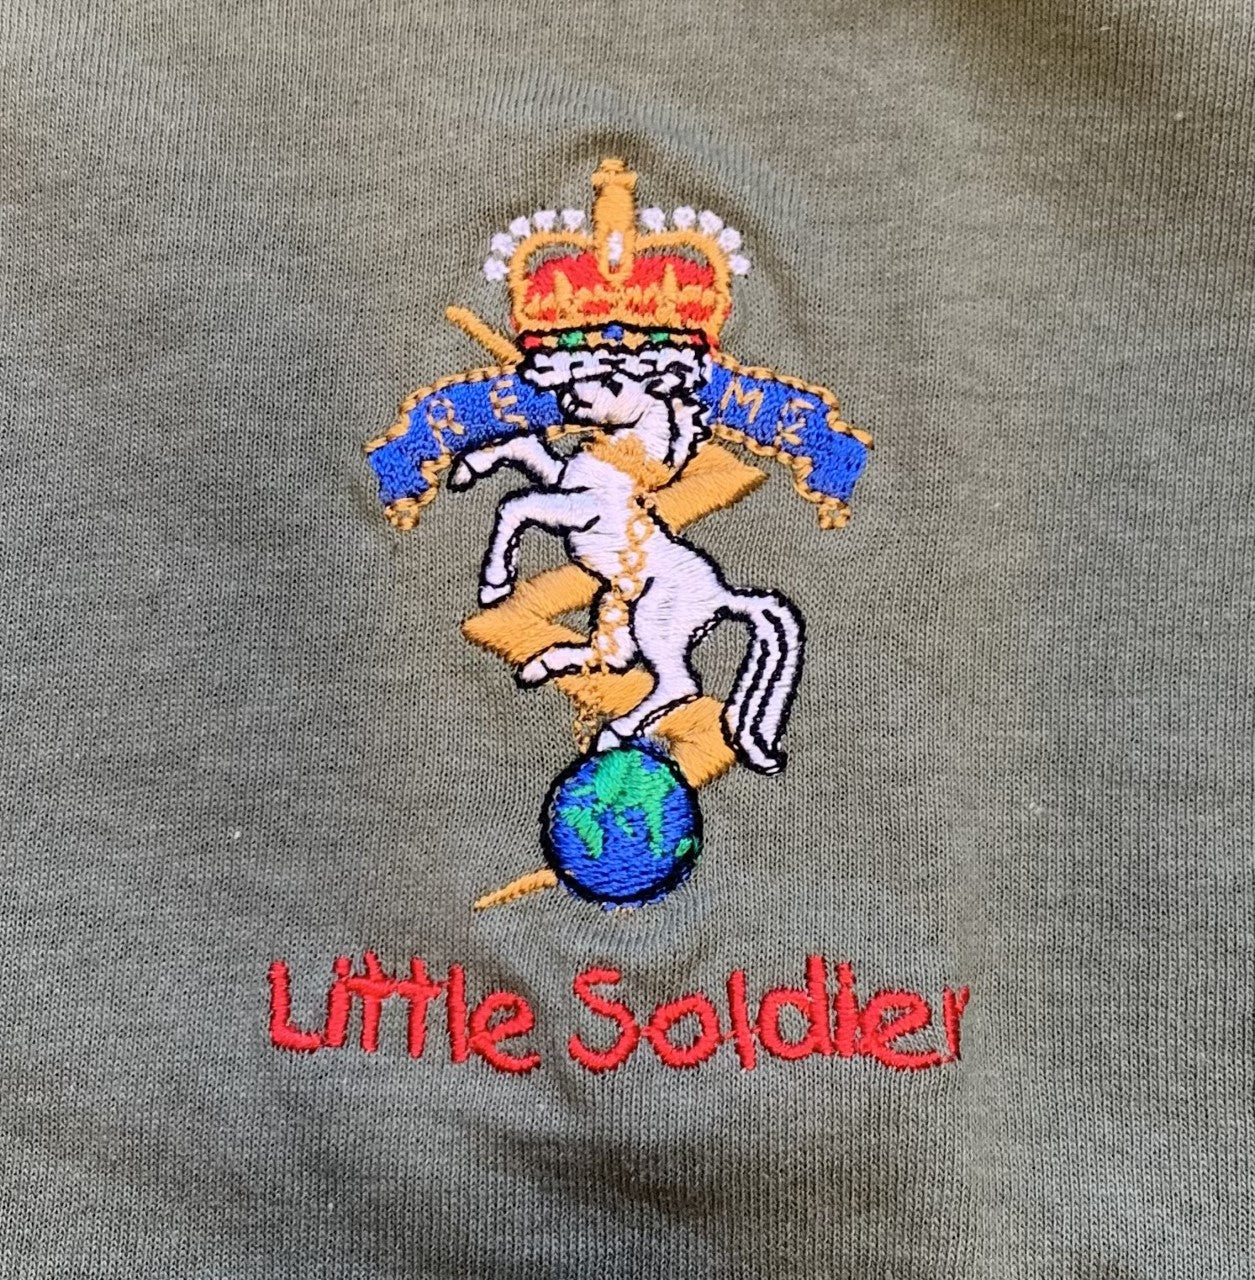 REME Kids Olive T-shirt - Little Soldier